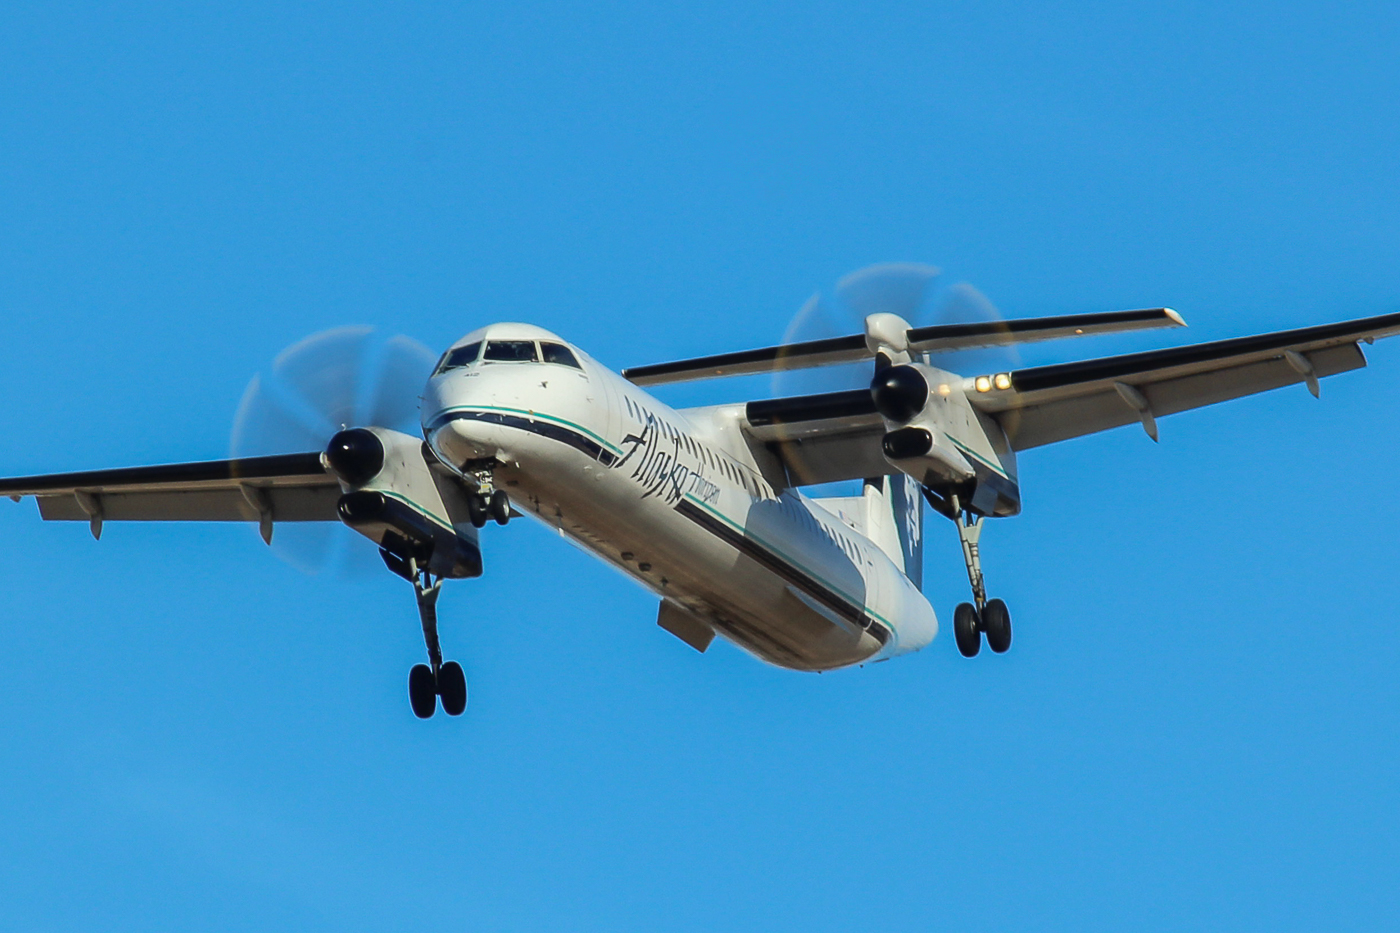 De Havilland's Dash-8 Q400: A Reliable and Cost-Effective Aircraft